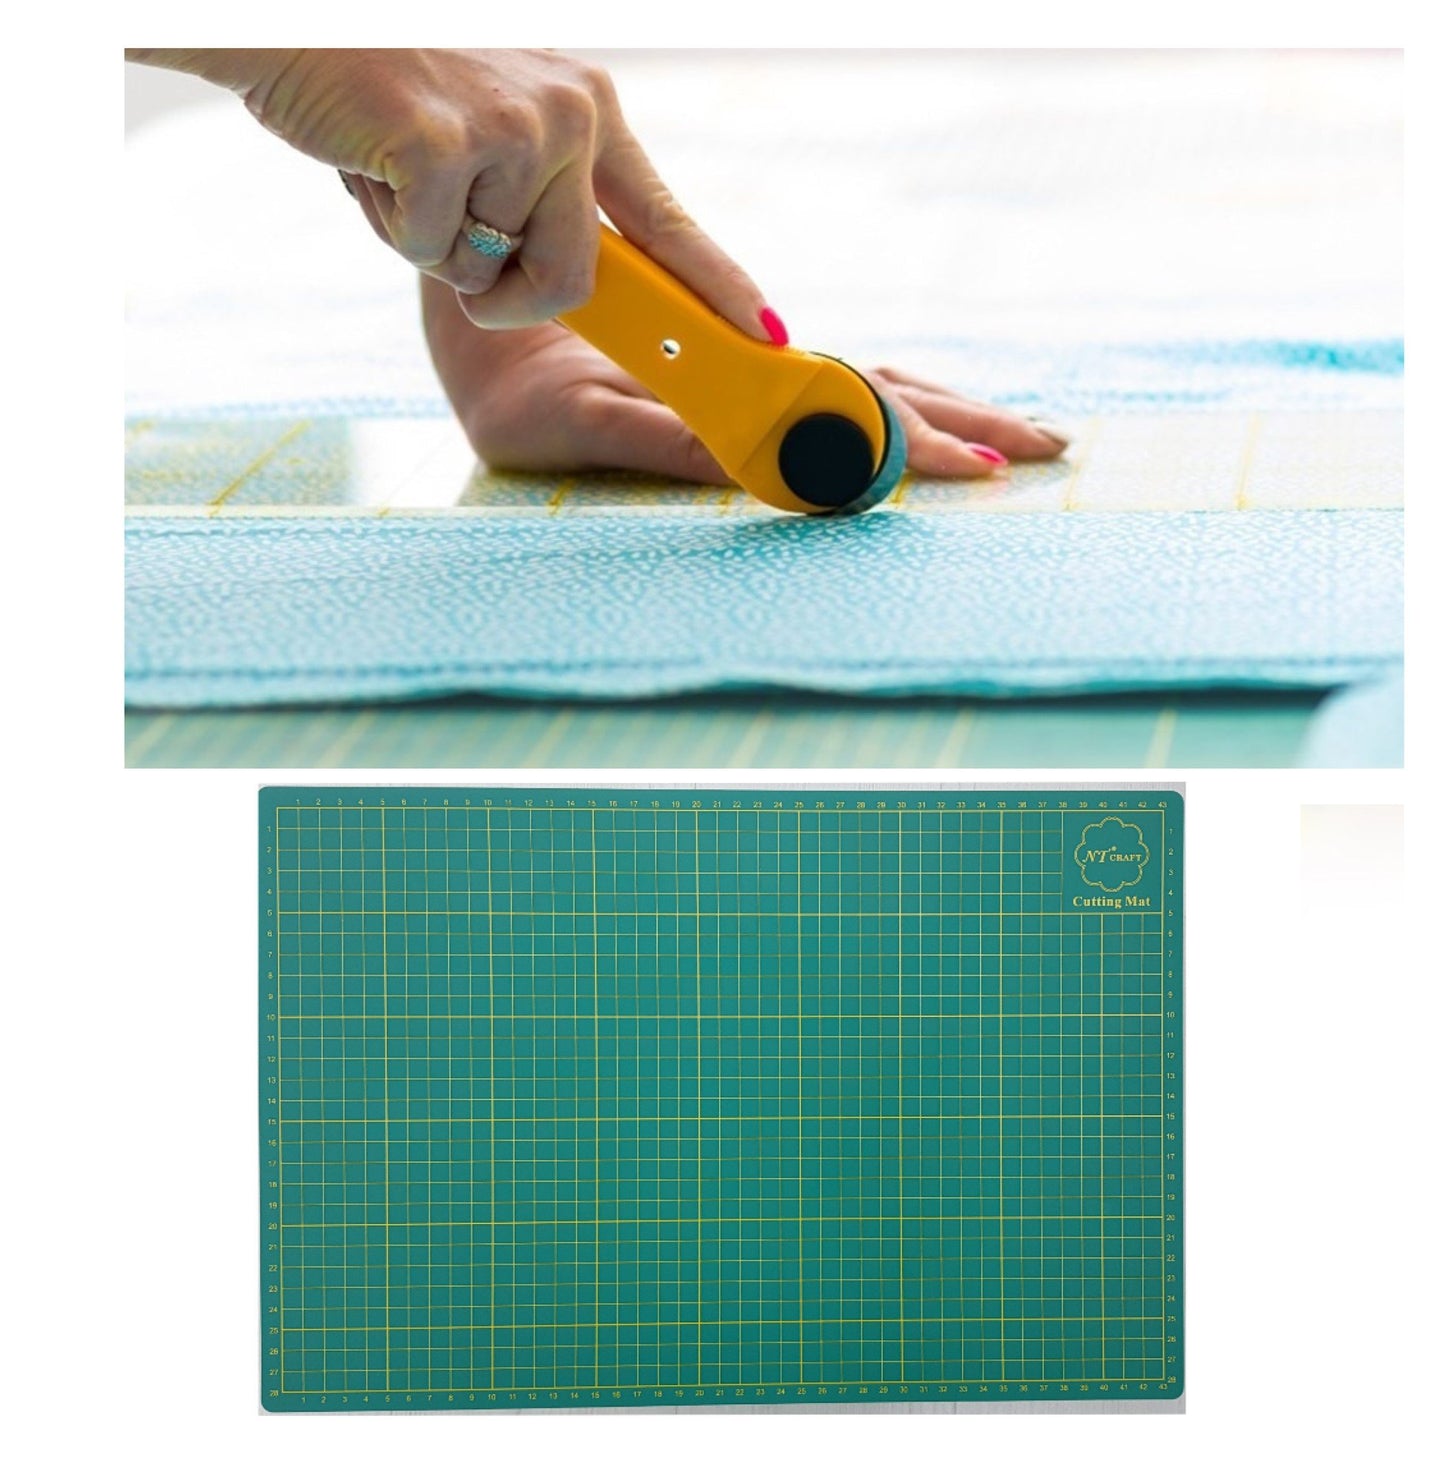 Cutting Mat - Cutting Mat - Cutting Table (A2) (60cm by 45cm wide)